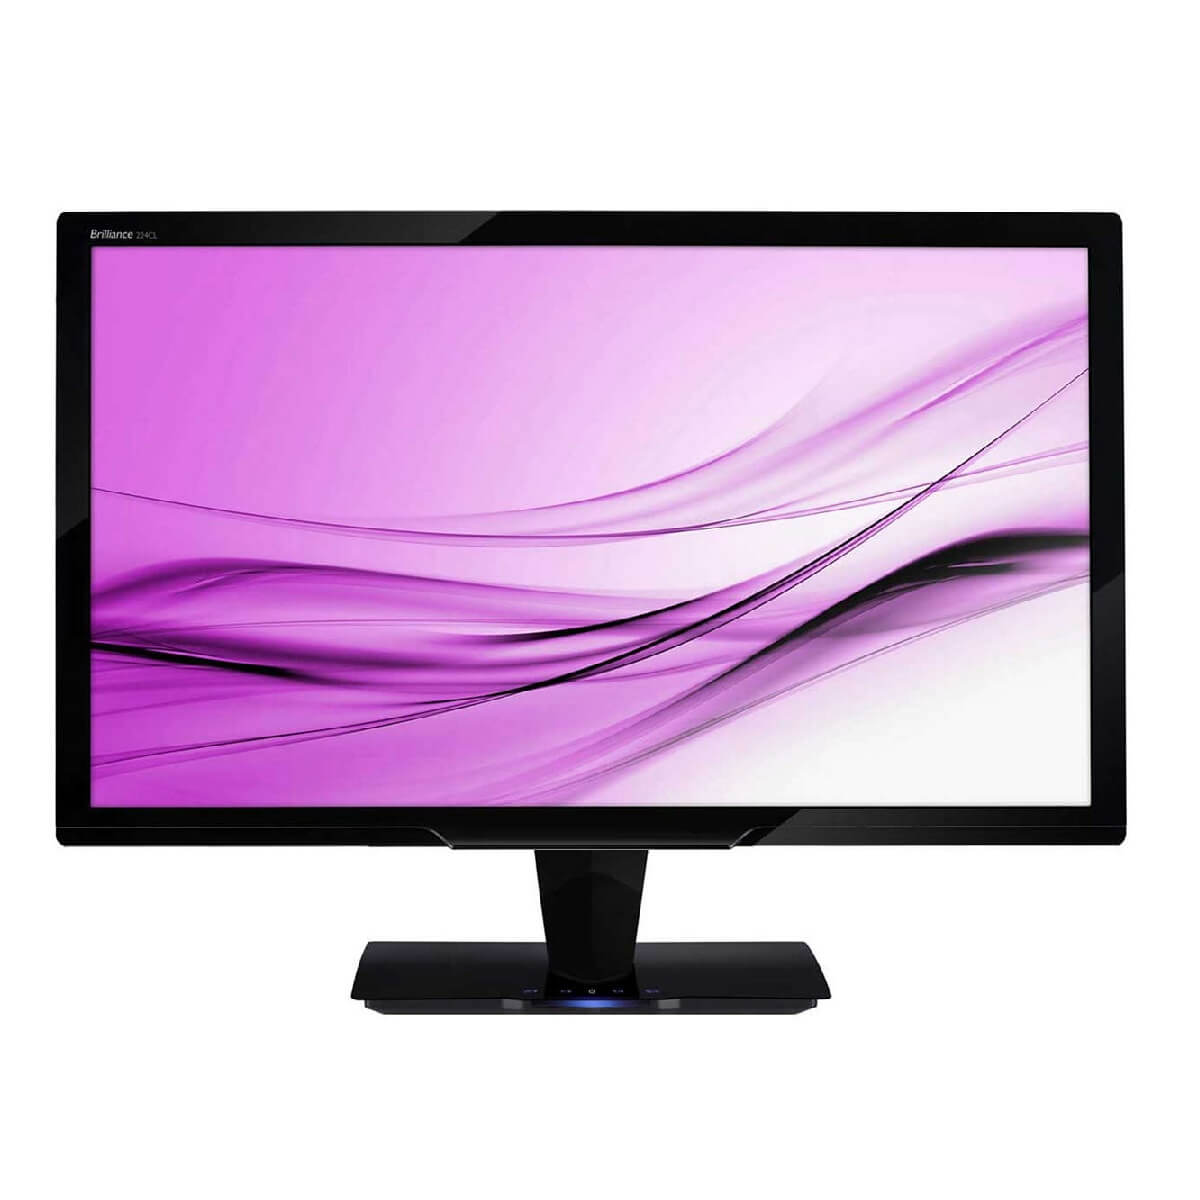 Best LED-backlit LCD monitors